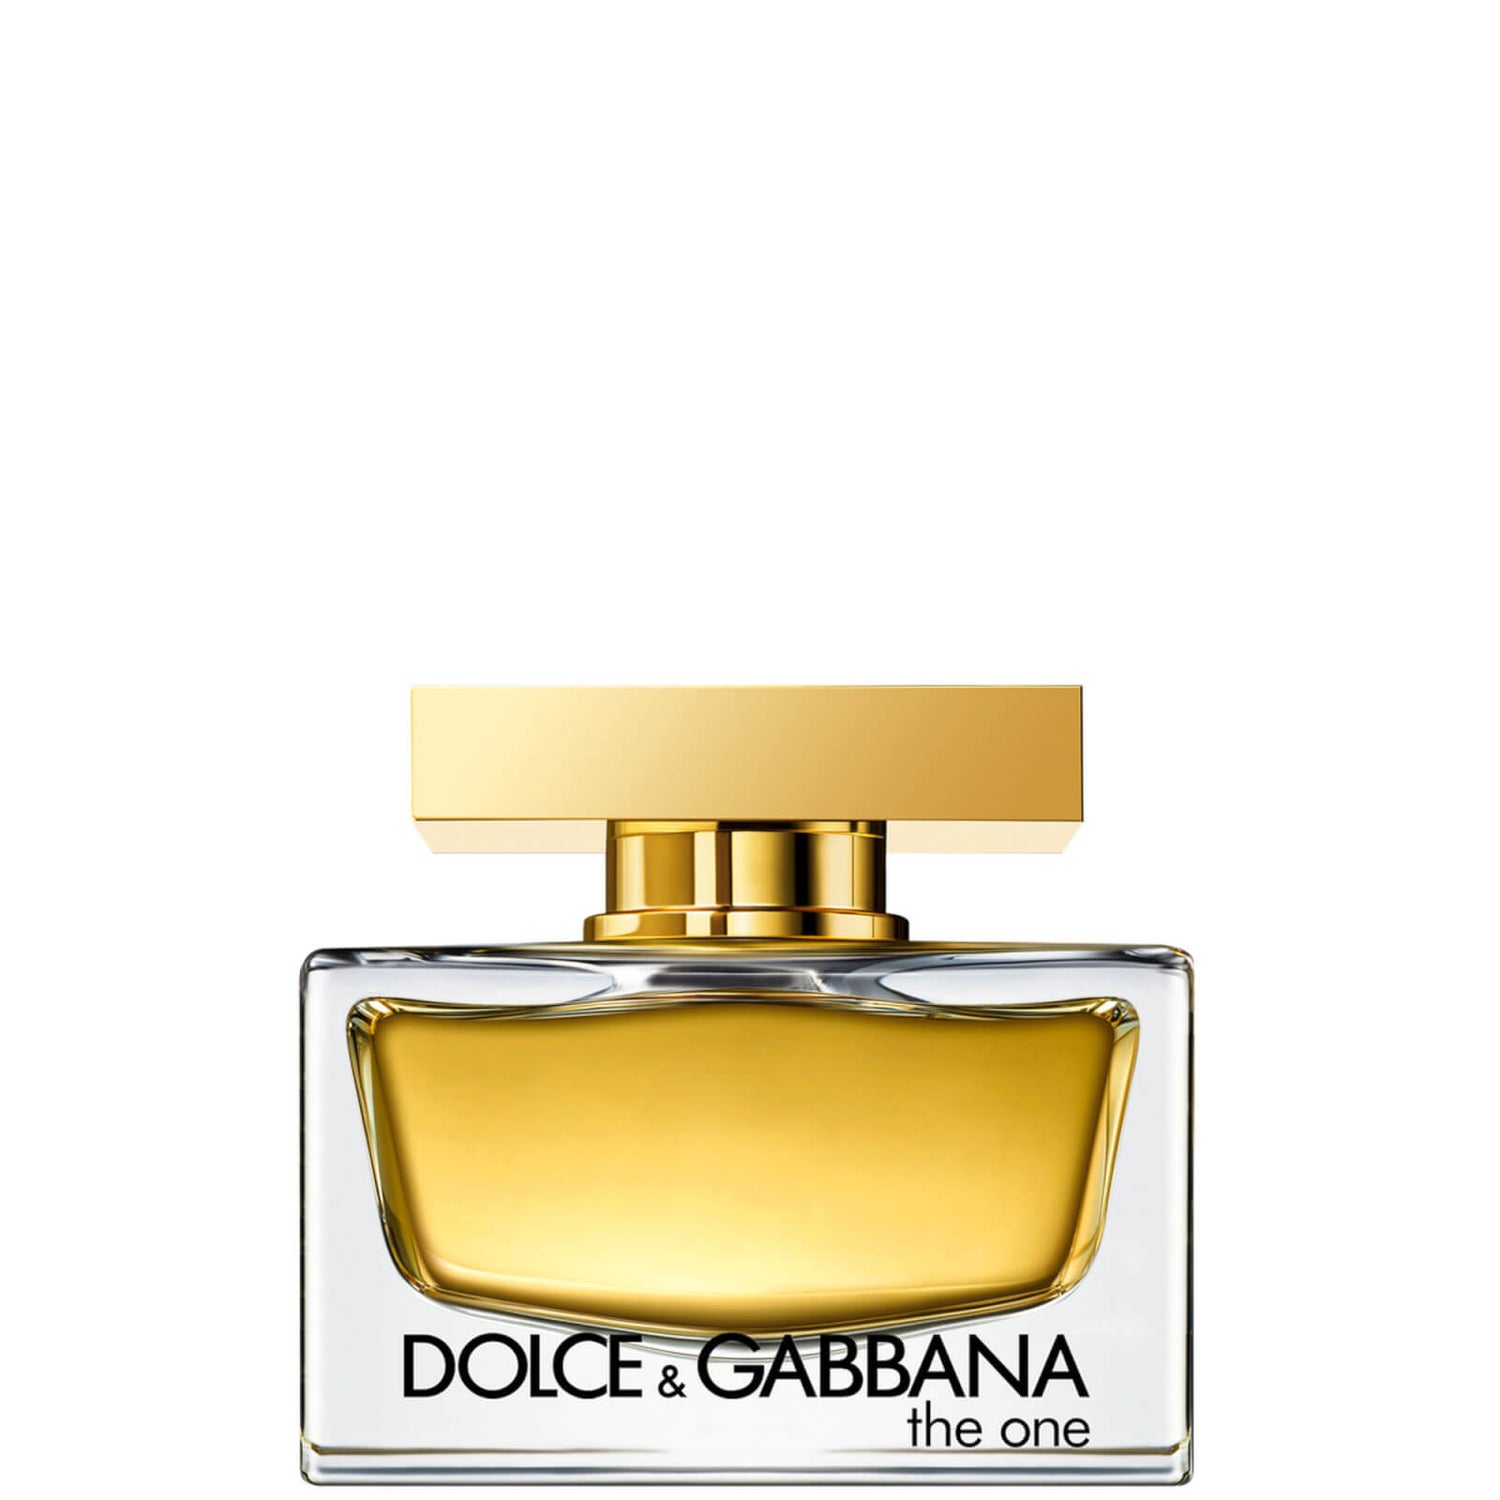 Dolce&Gabbana The One Eau de Parfum 50ml - LOOKFANTASTIC